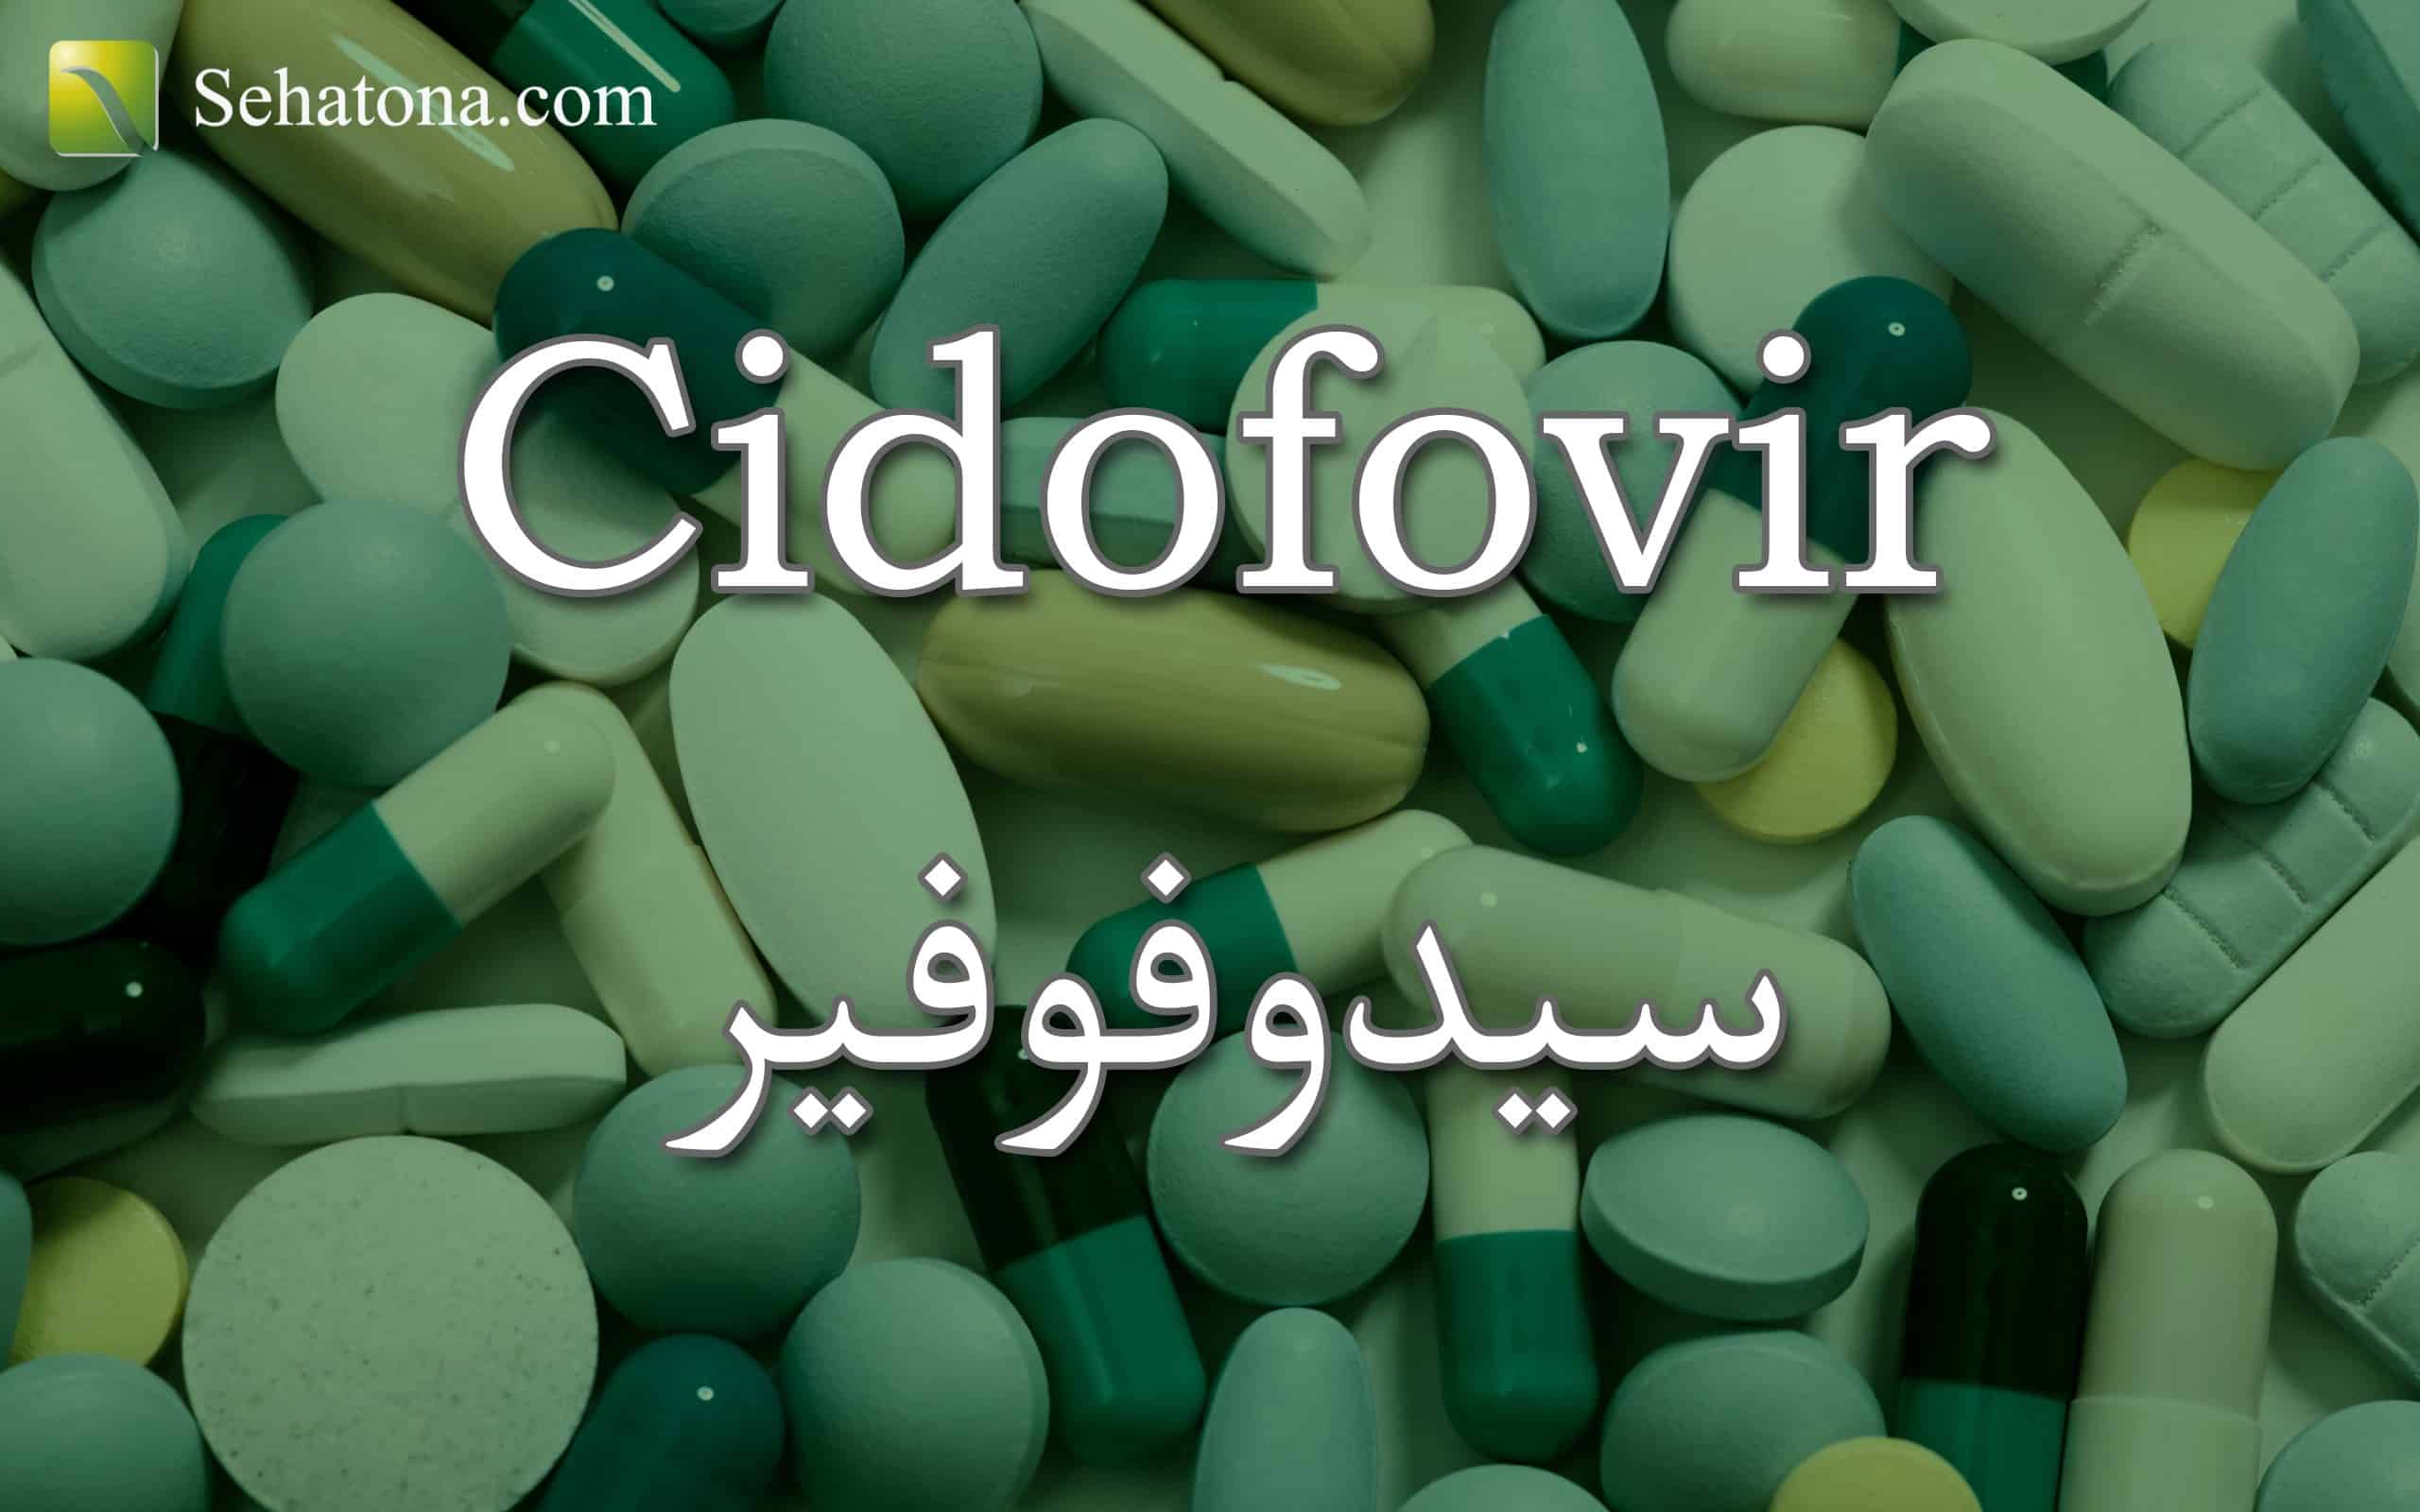 Cidofovir